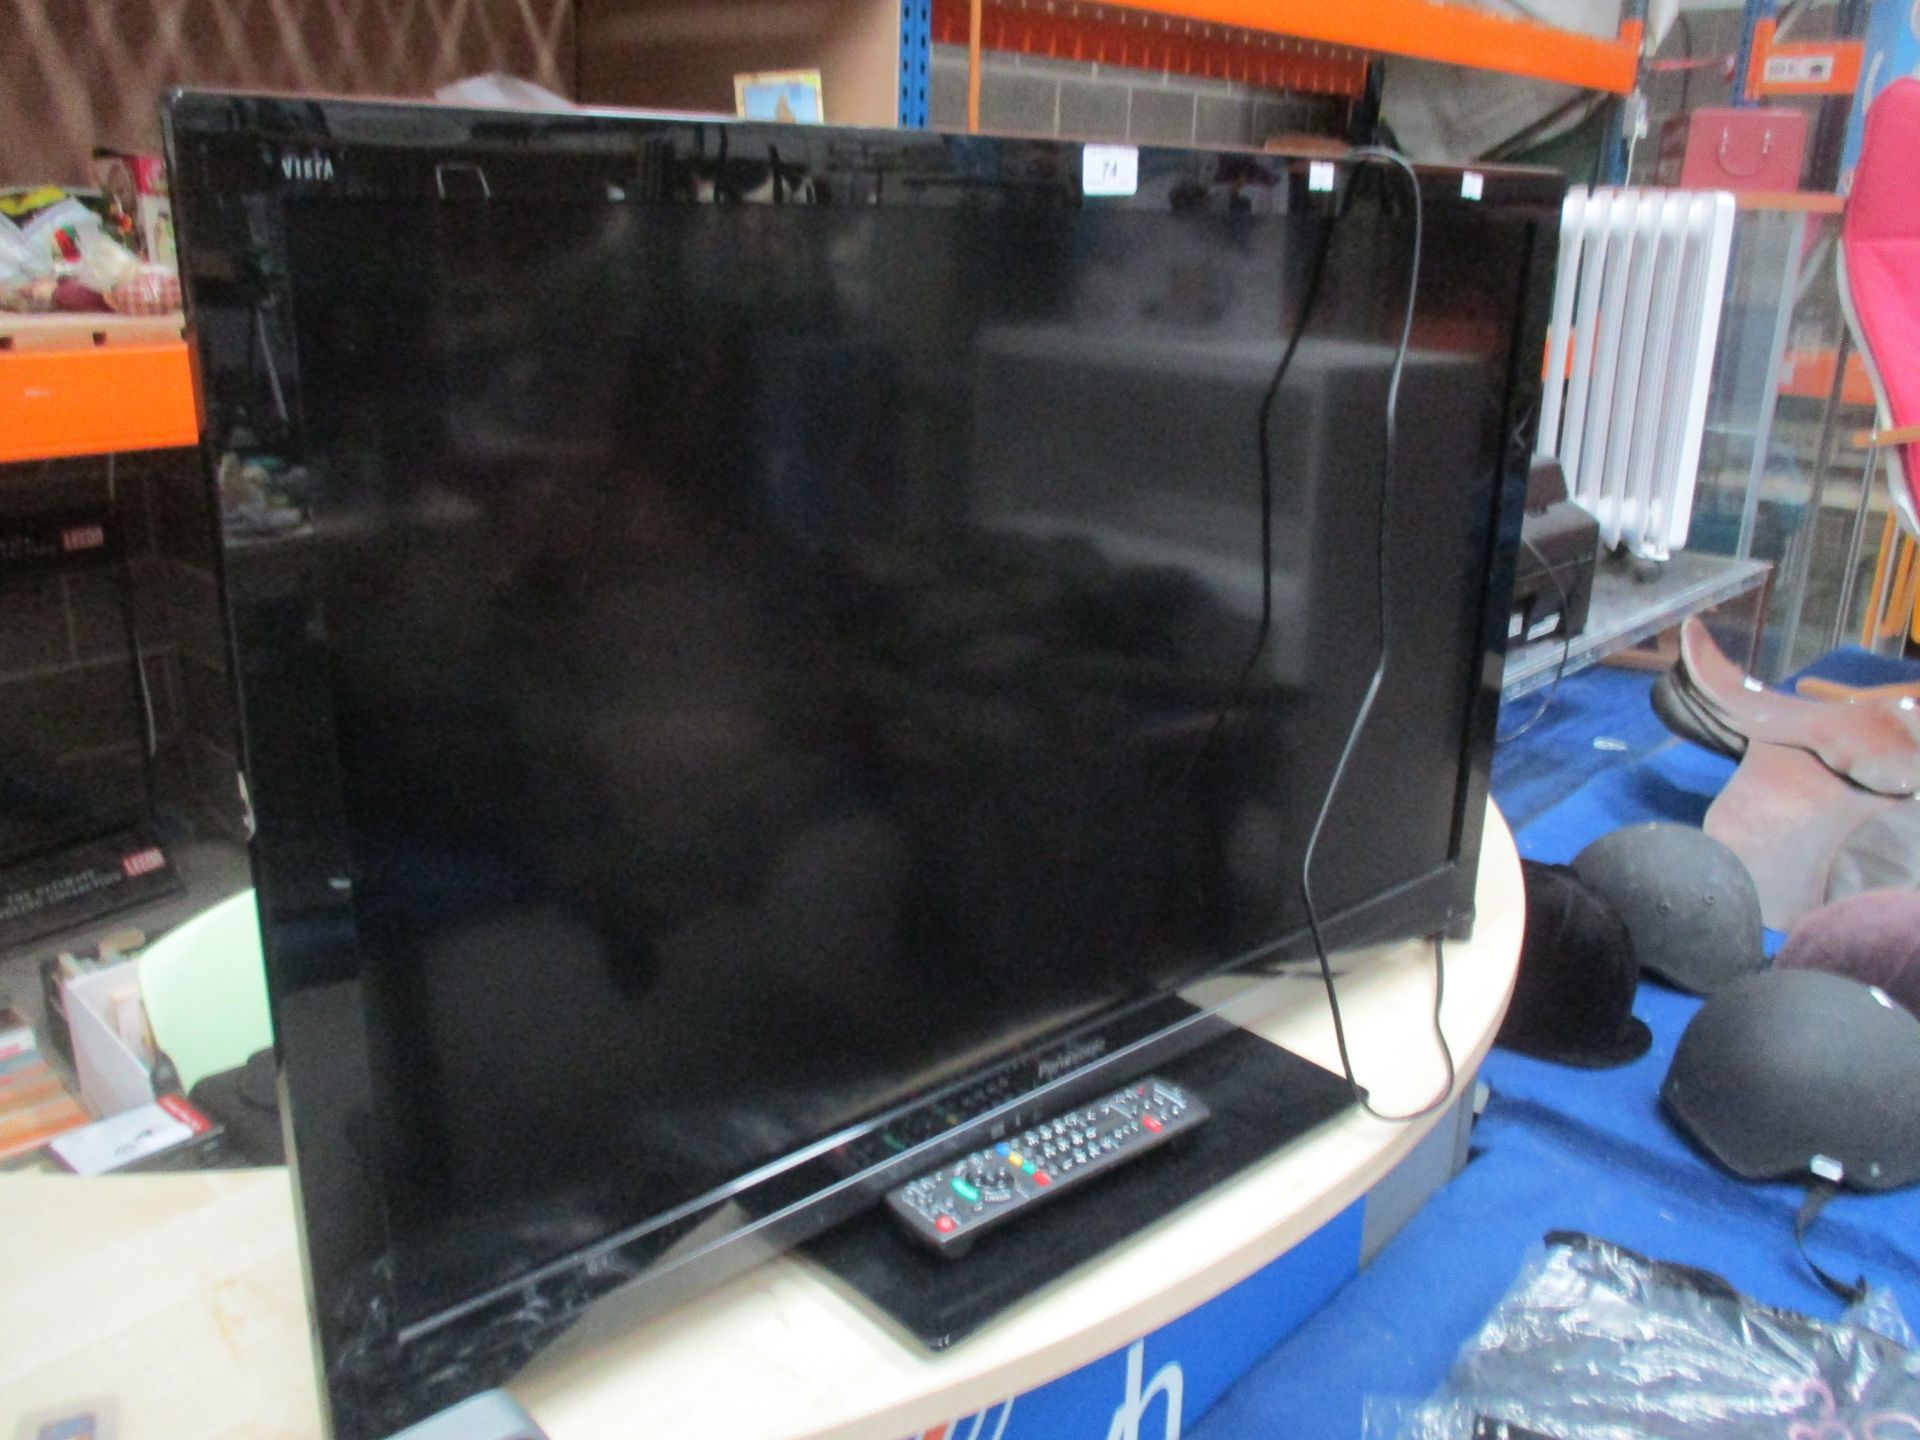 A Panasonic Viera TX-L37E3B 37"" LCD TV - remote control